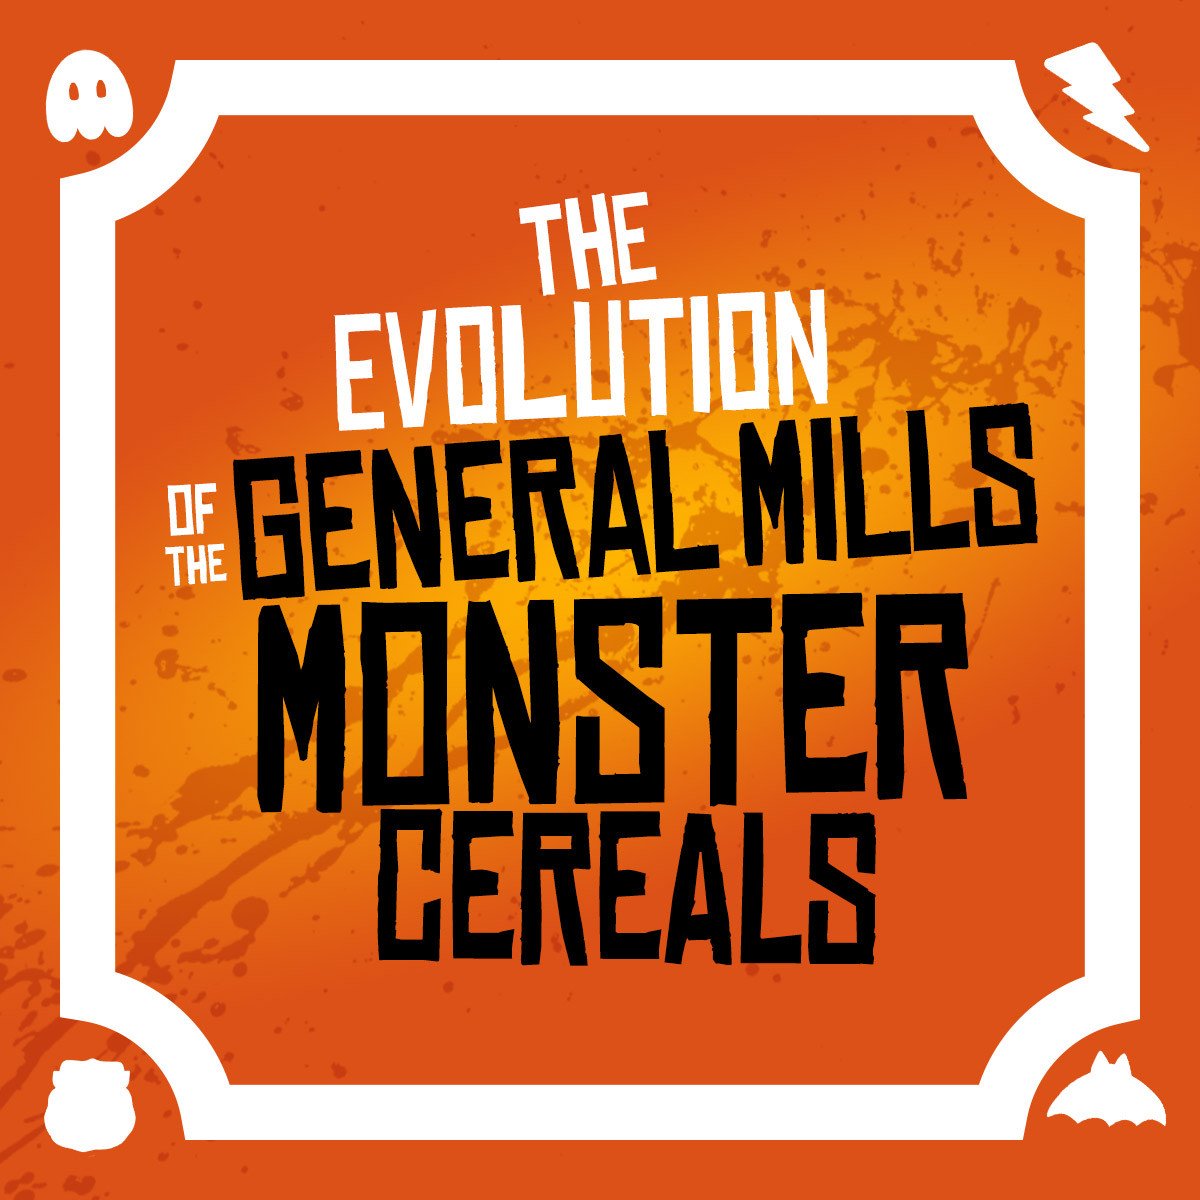 The return of two General Mills monsters - General Mills